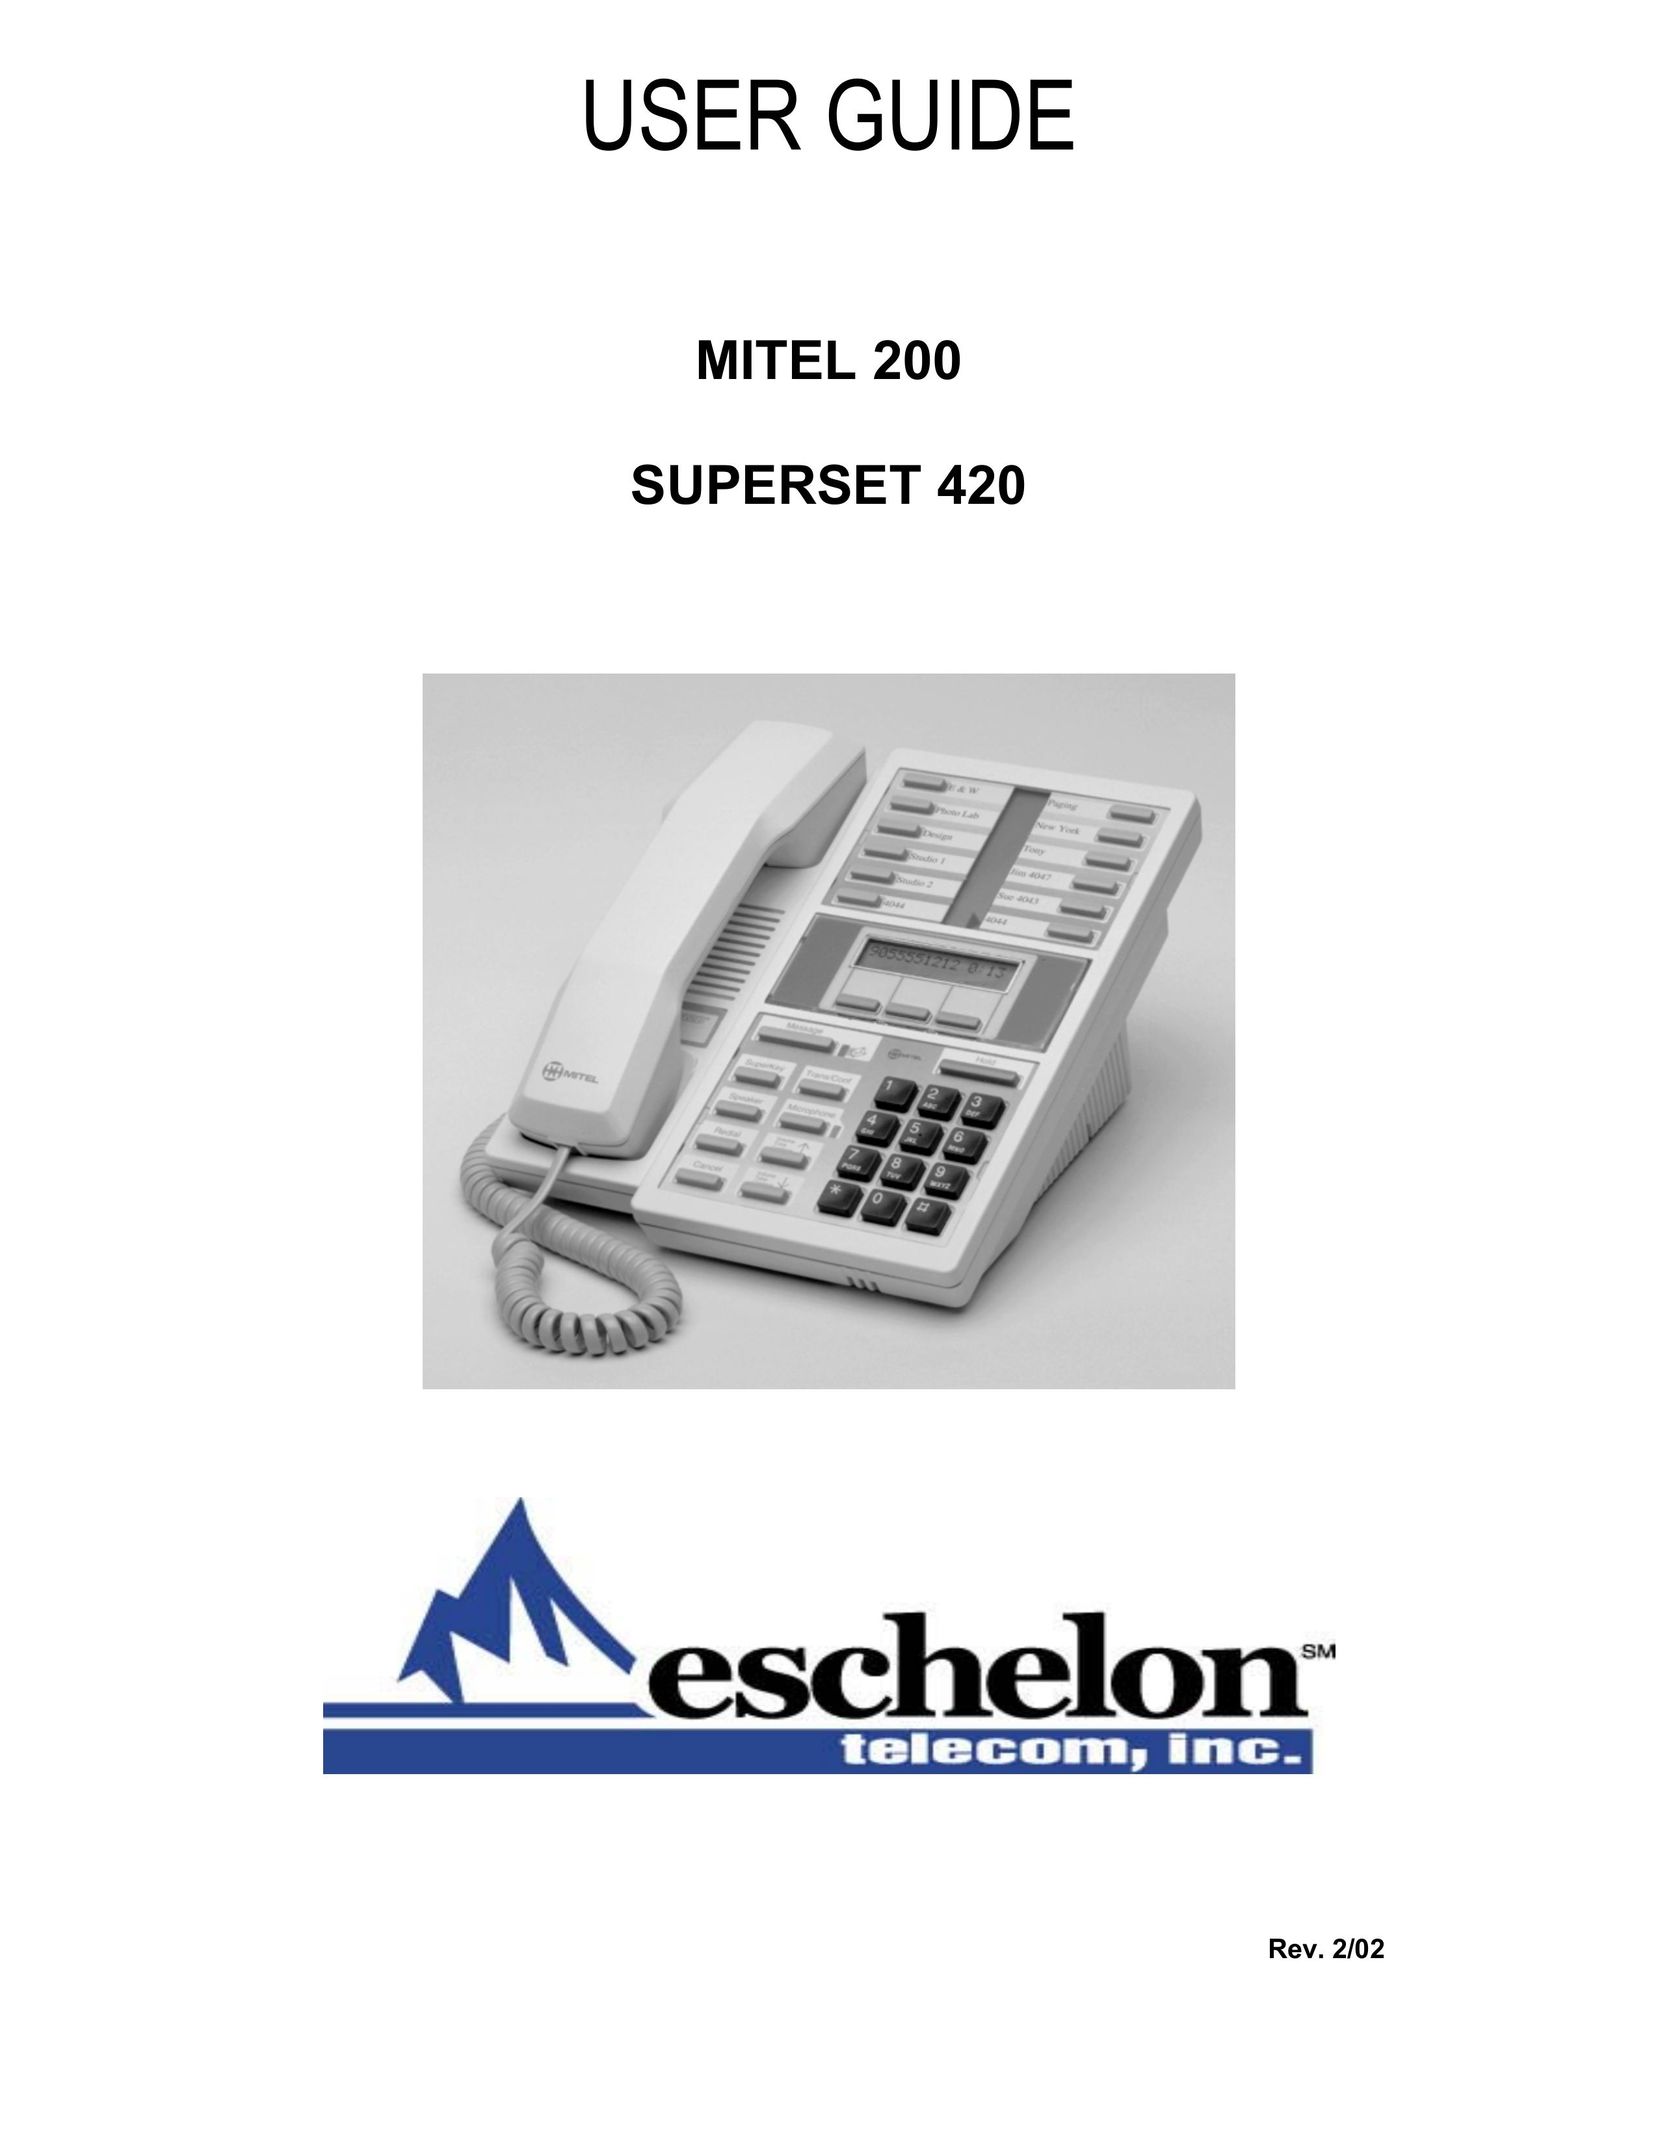 Mitel 200 Telephone User Manual